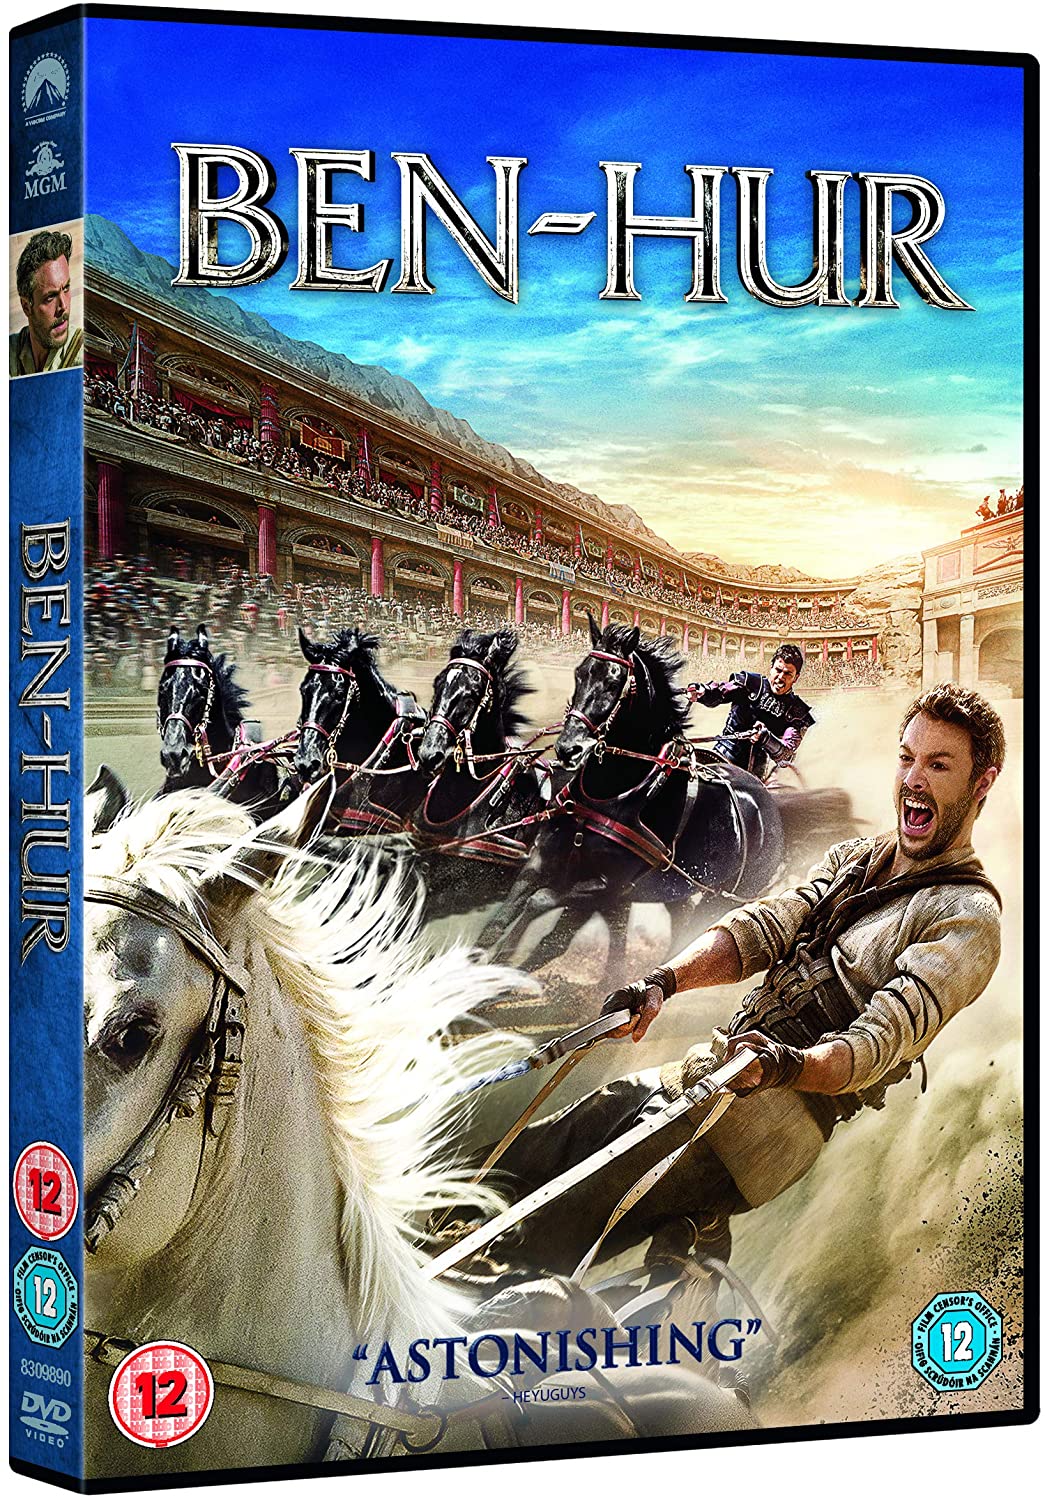 Ben Hur (DVD + Digital Download)